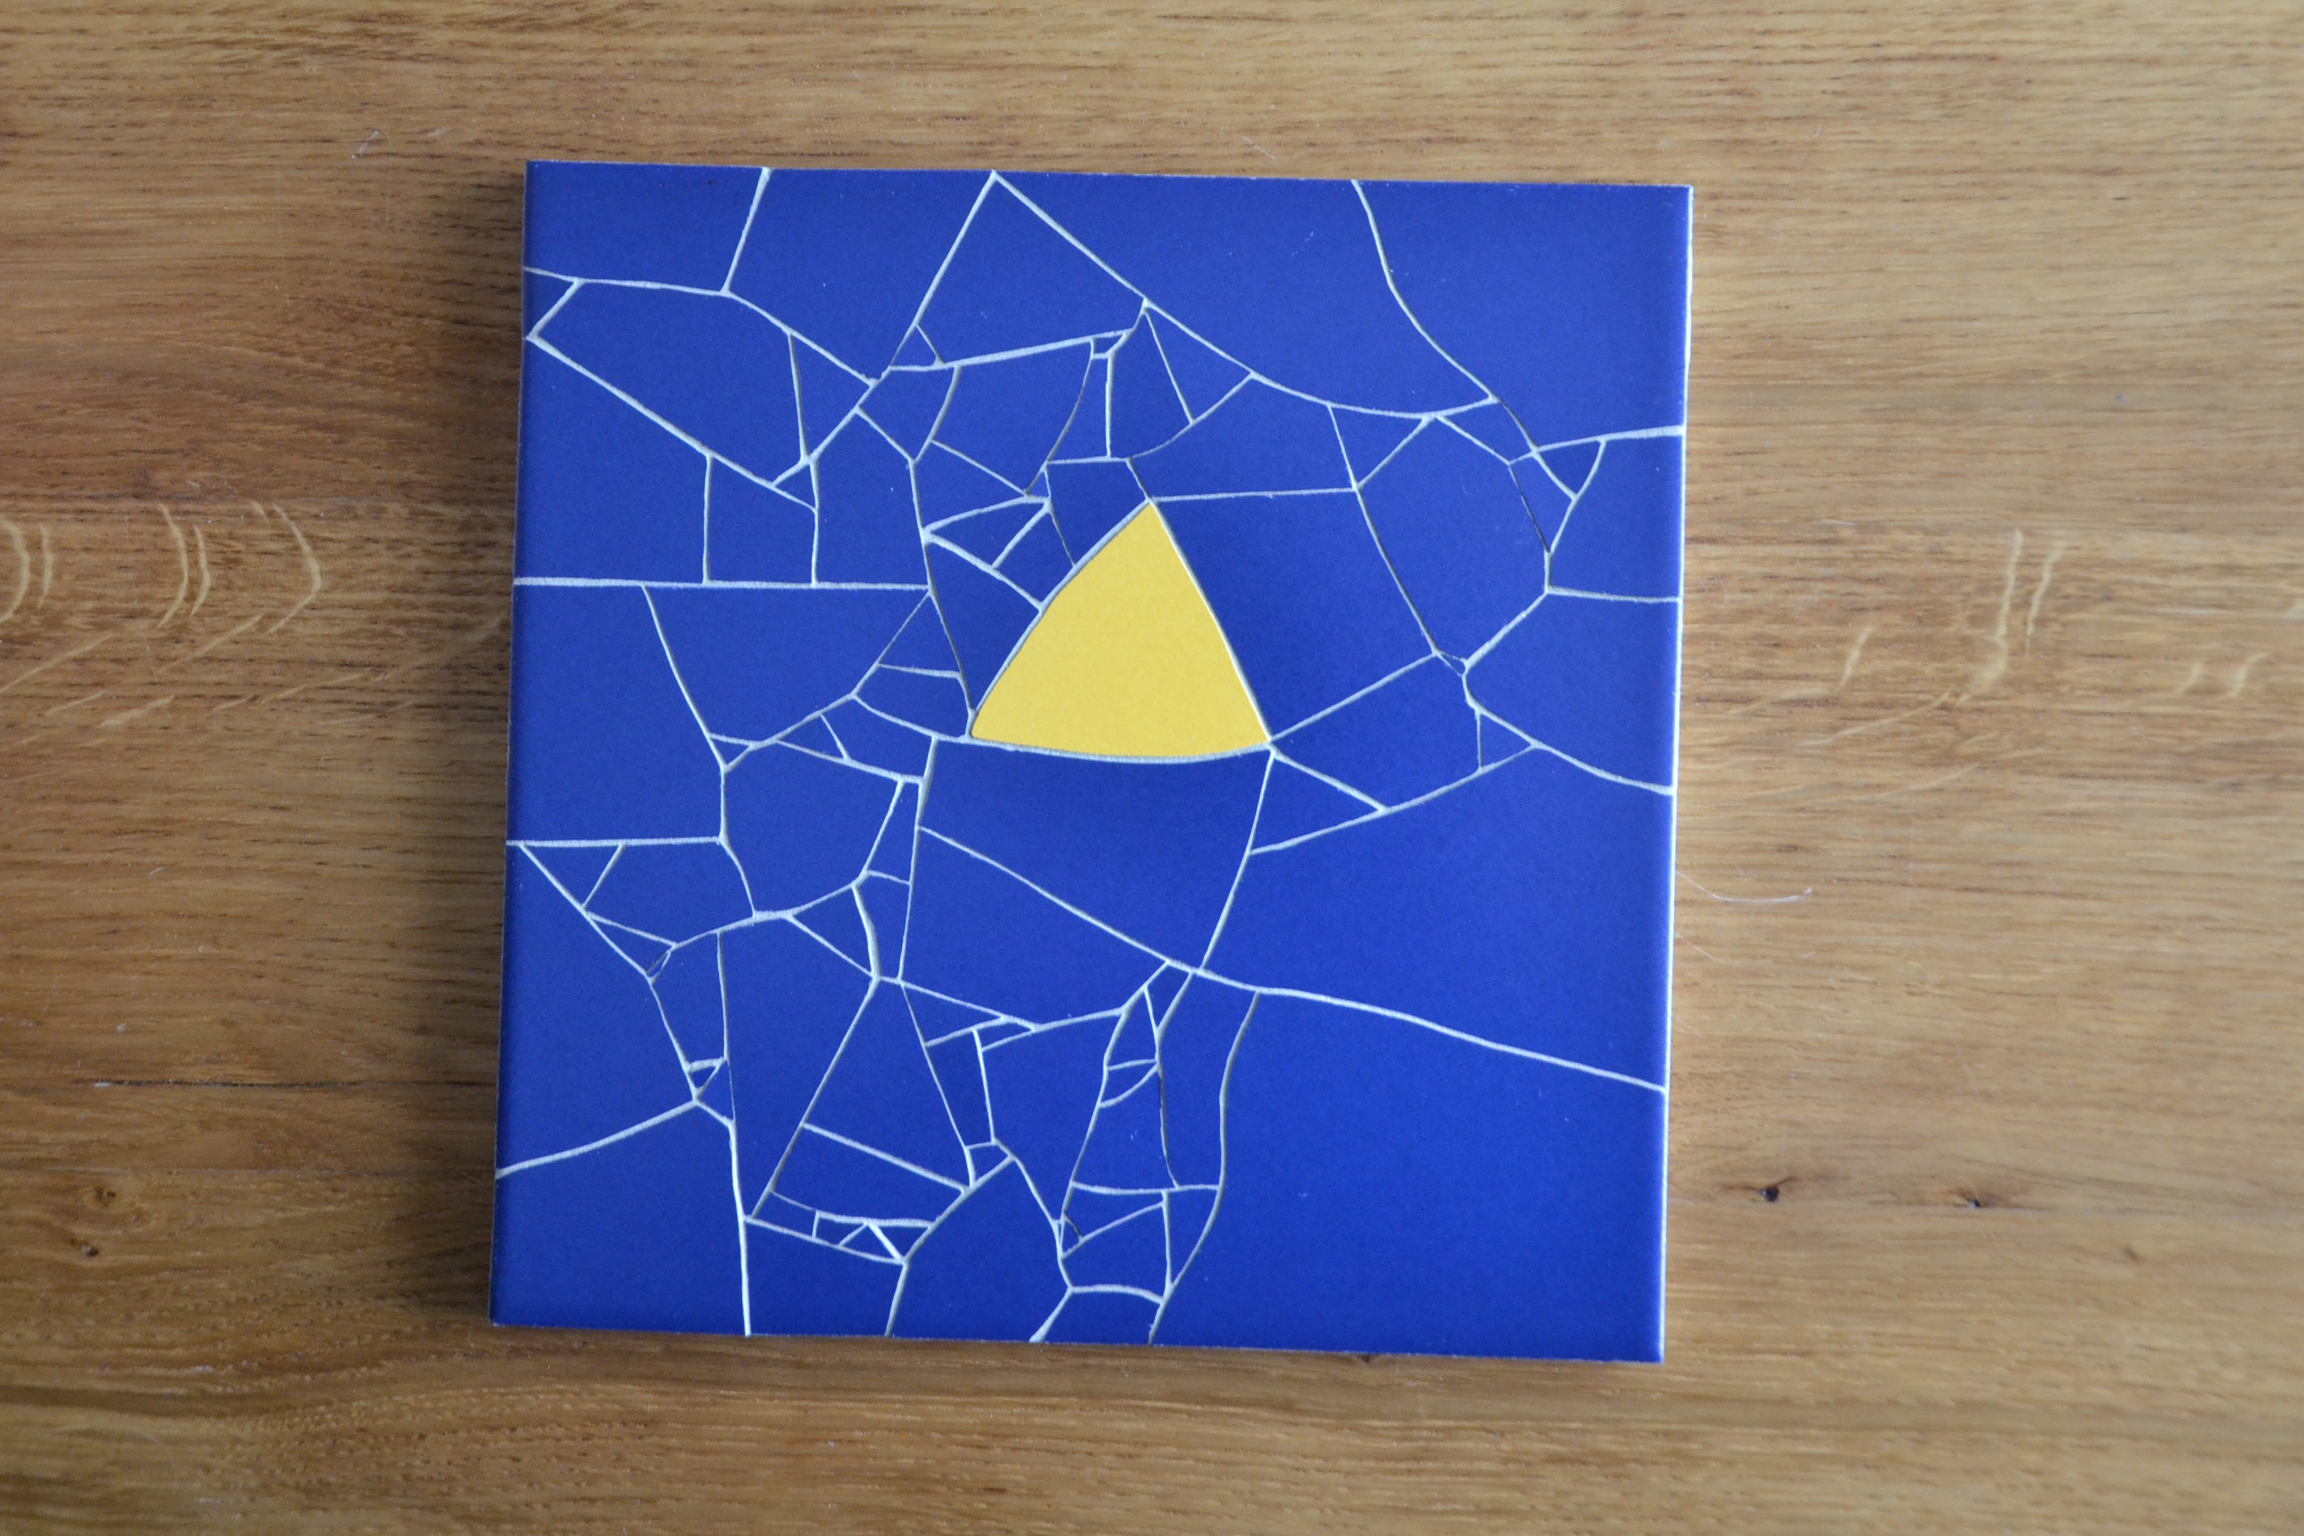 "Solitude Outremer", tableau en bleu et jaune